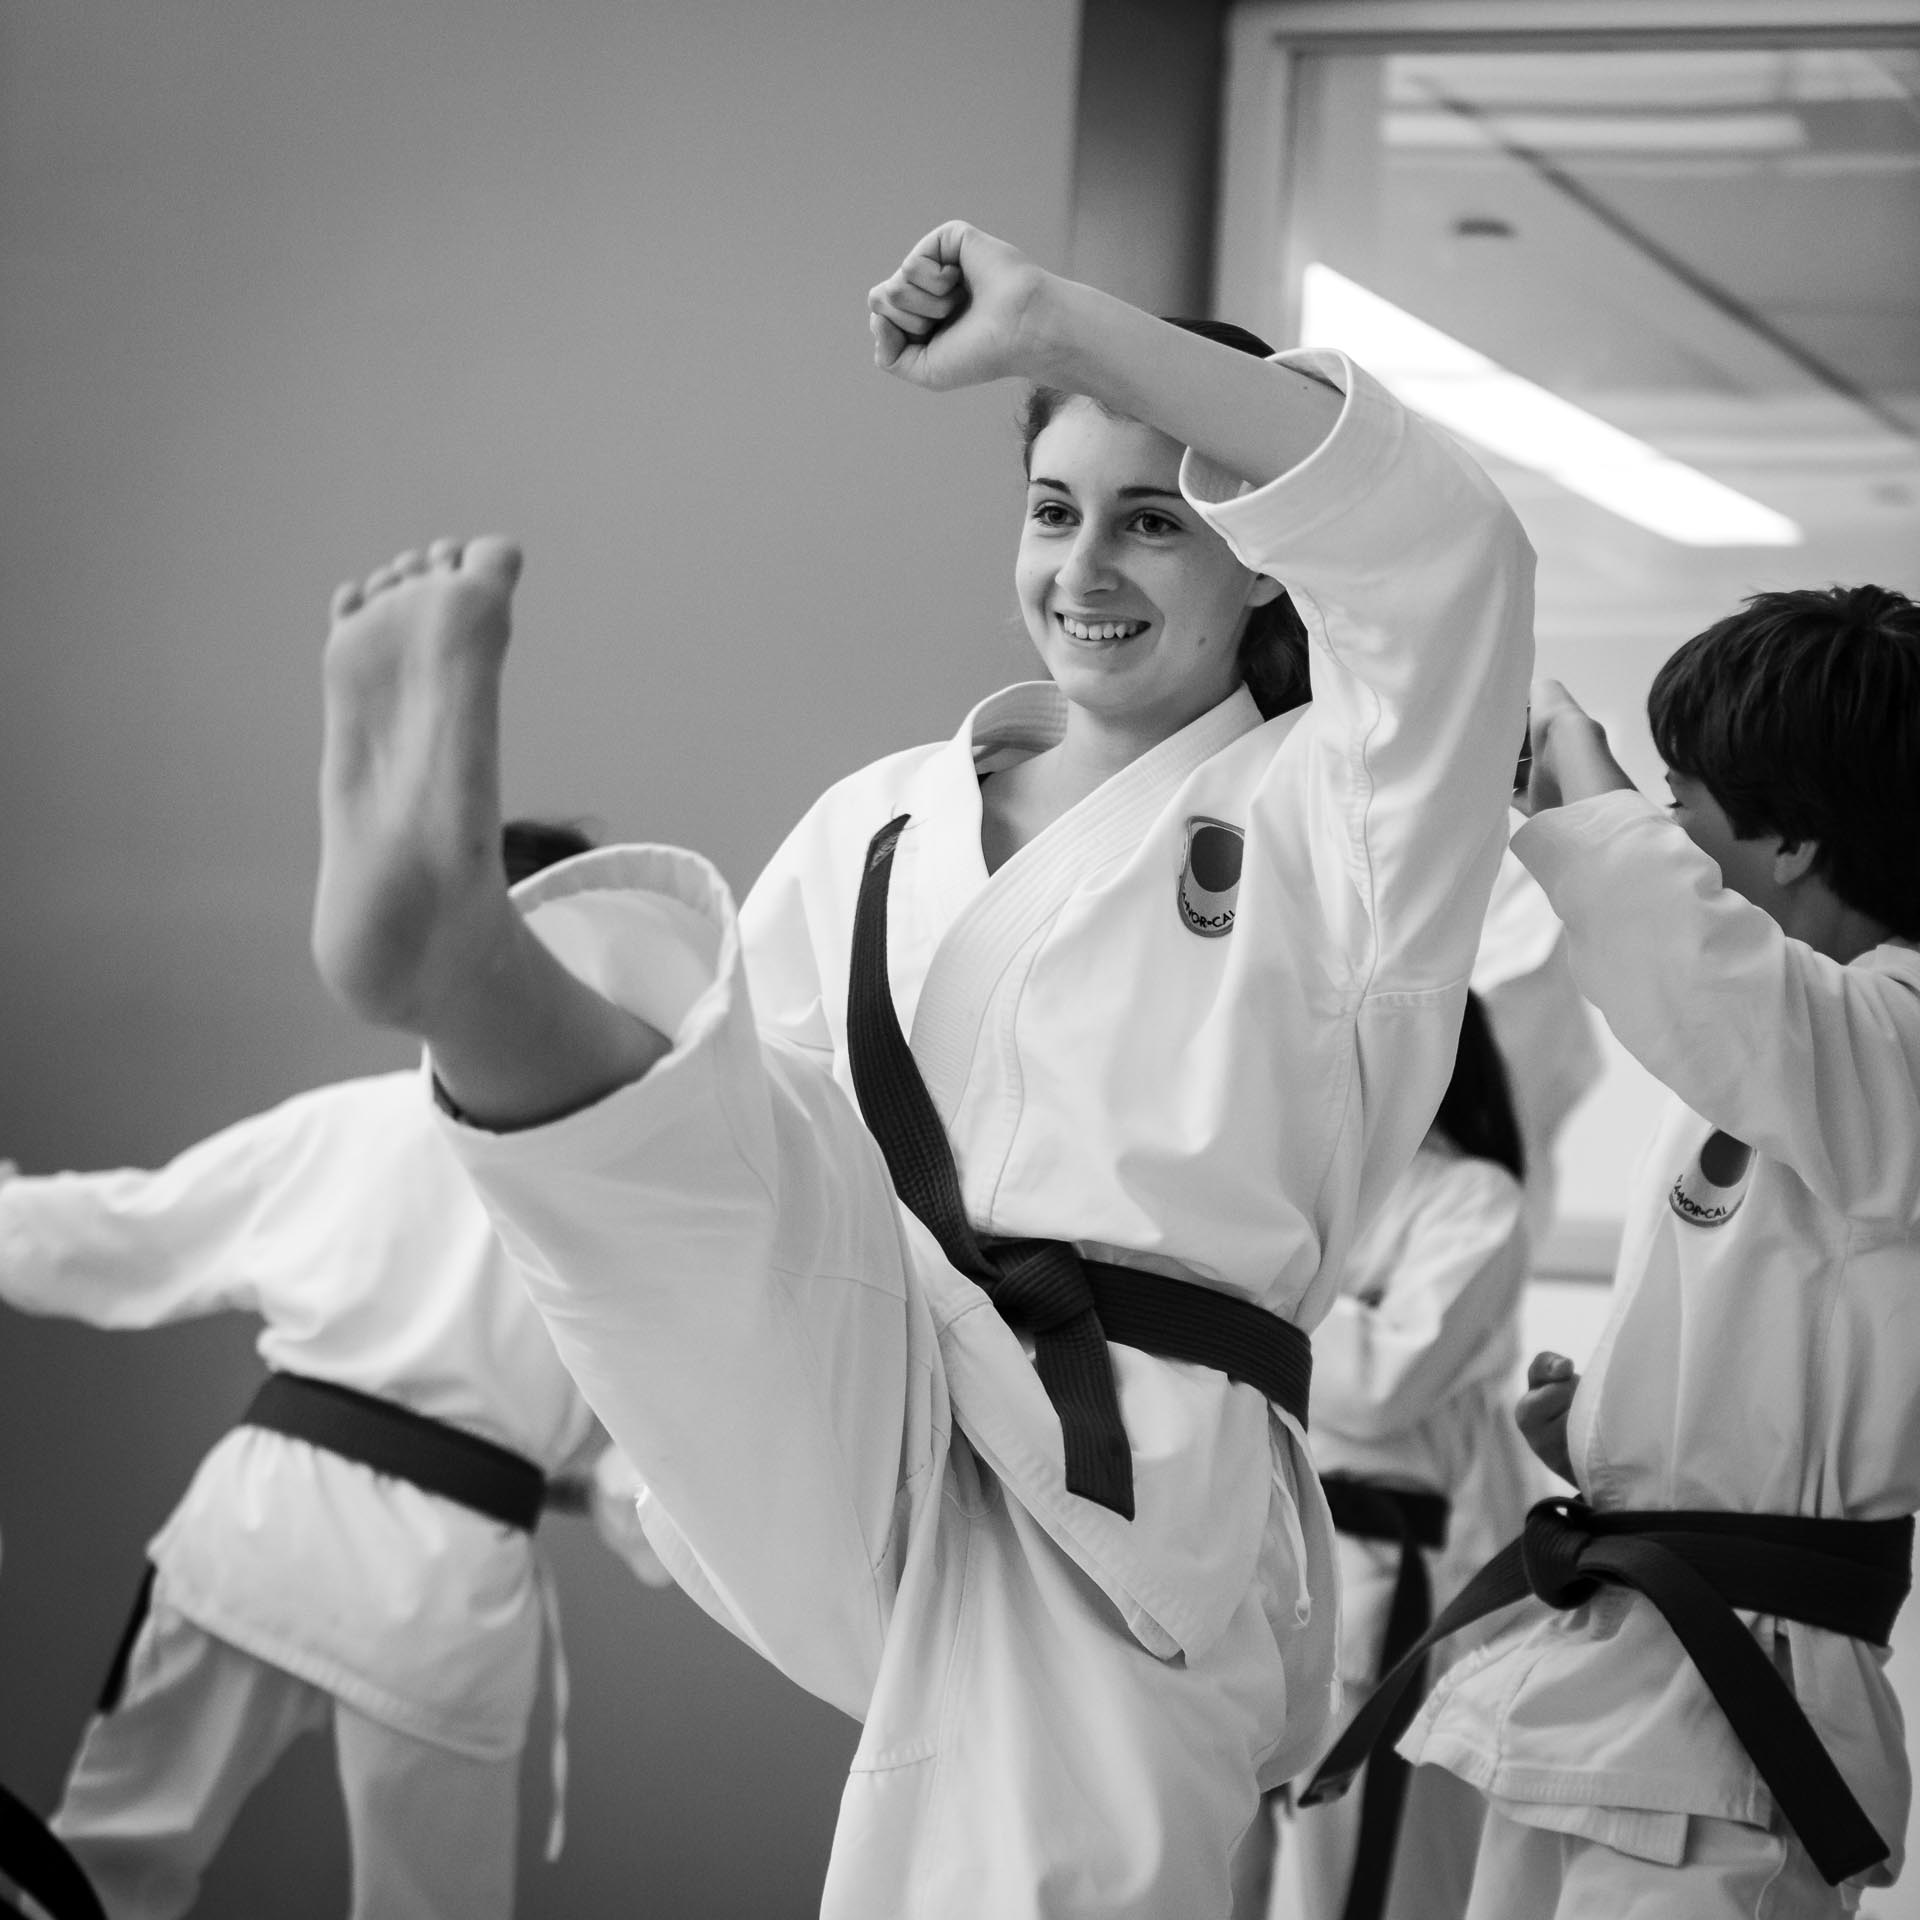 20121013_014 - JKA of Northern California: Shotokan Karate